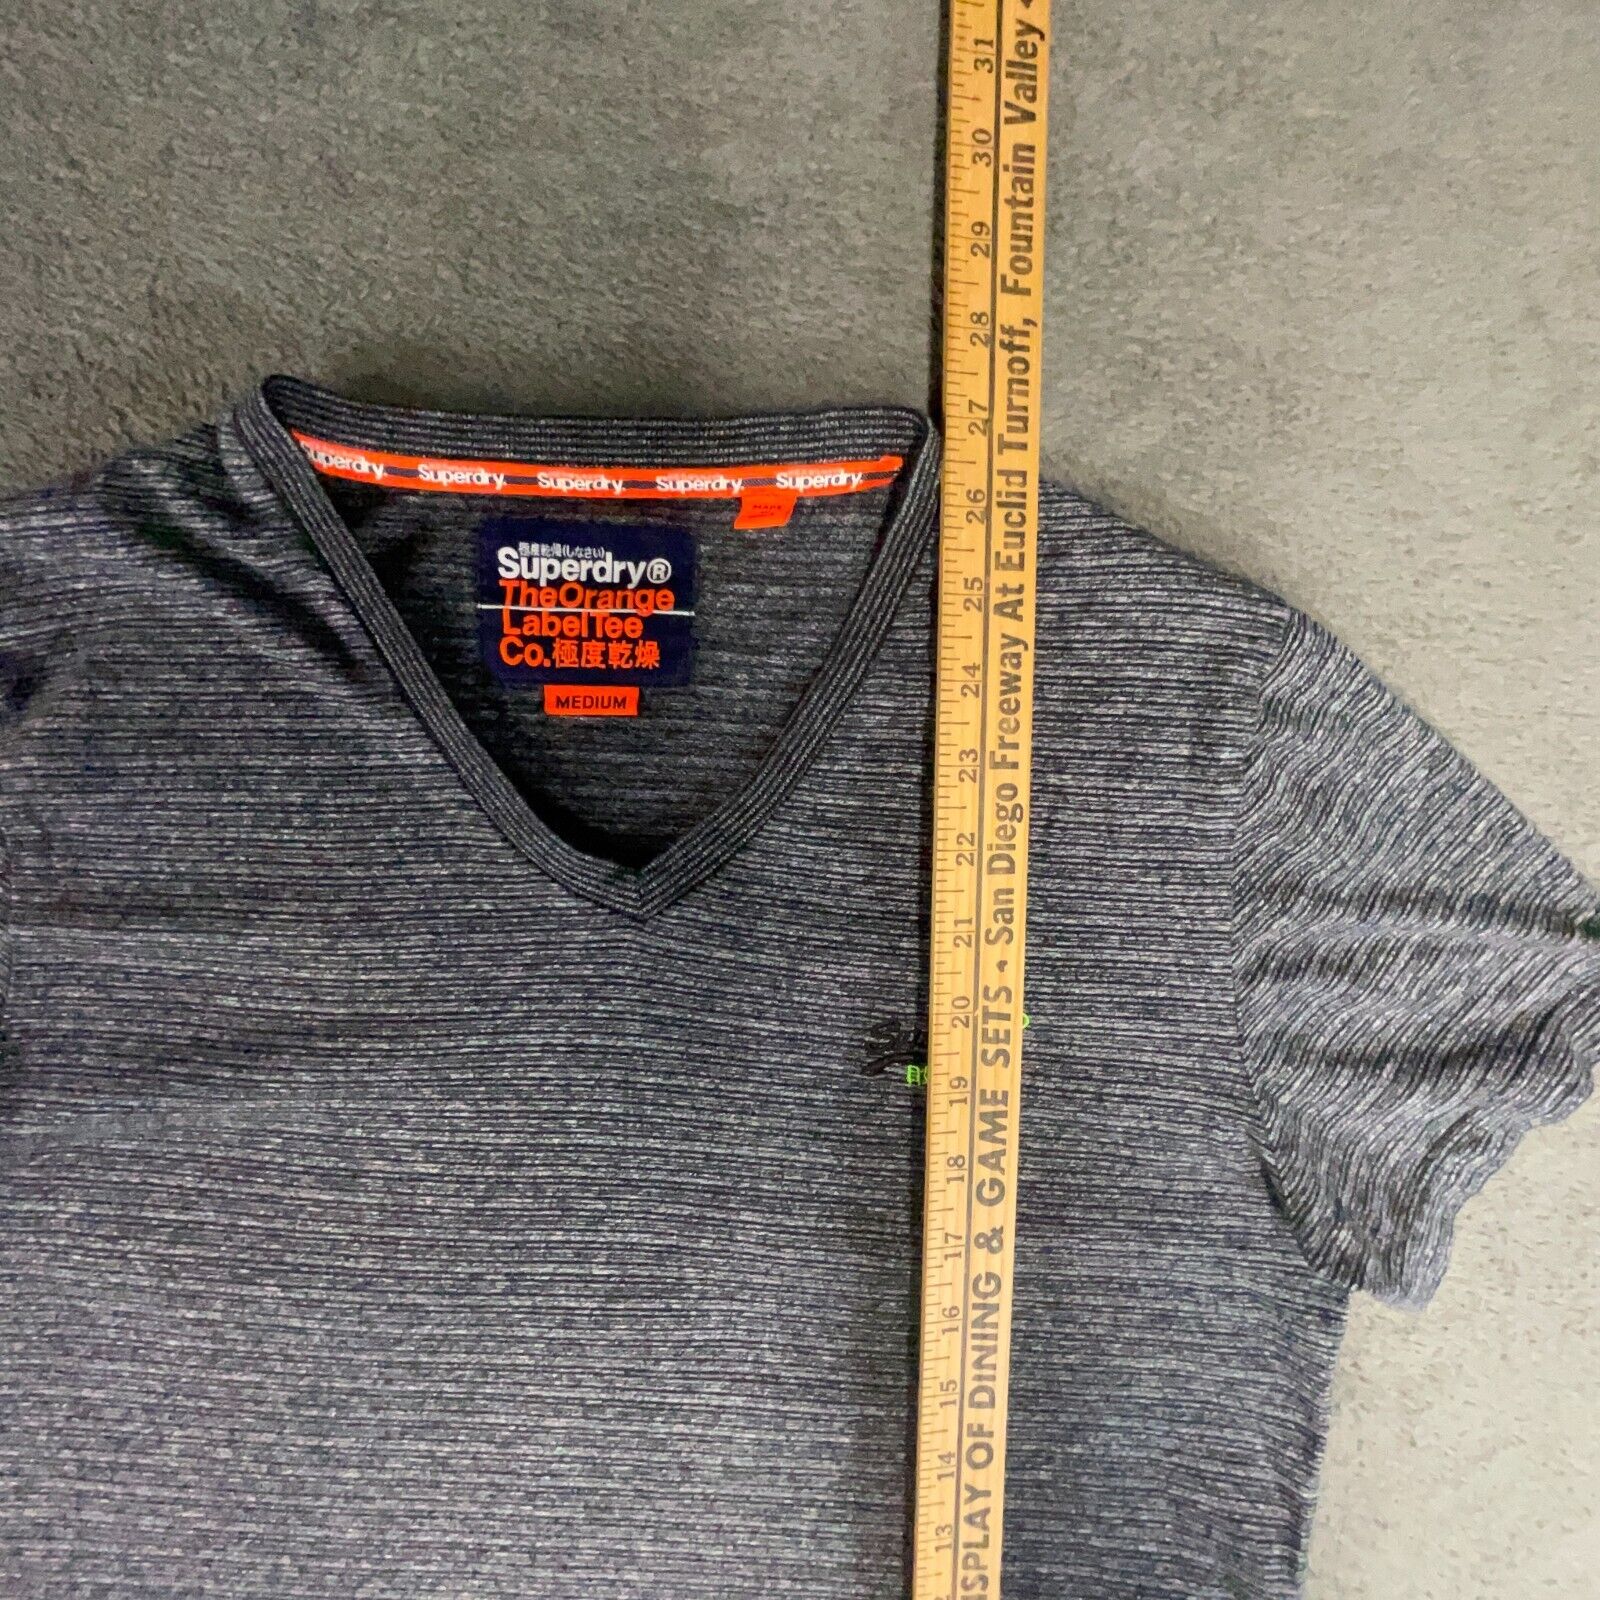 Super Dry Womens Shirt Medium Gray Short Sleeve Embroidered Logo Orange Label